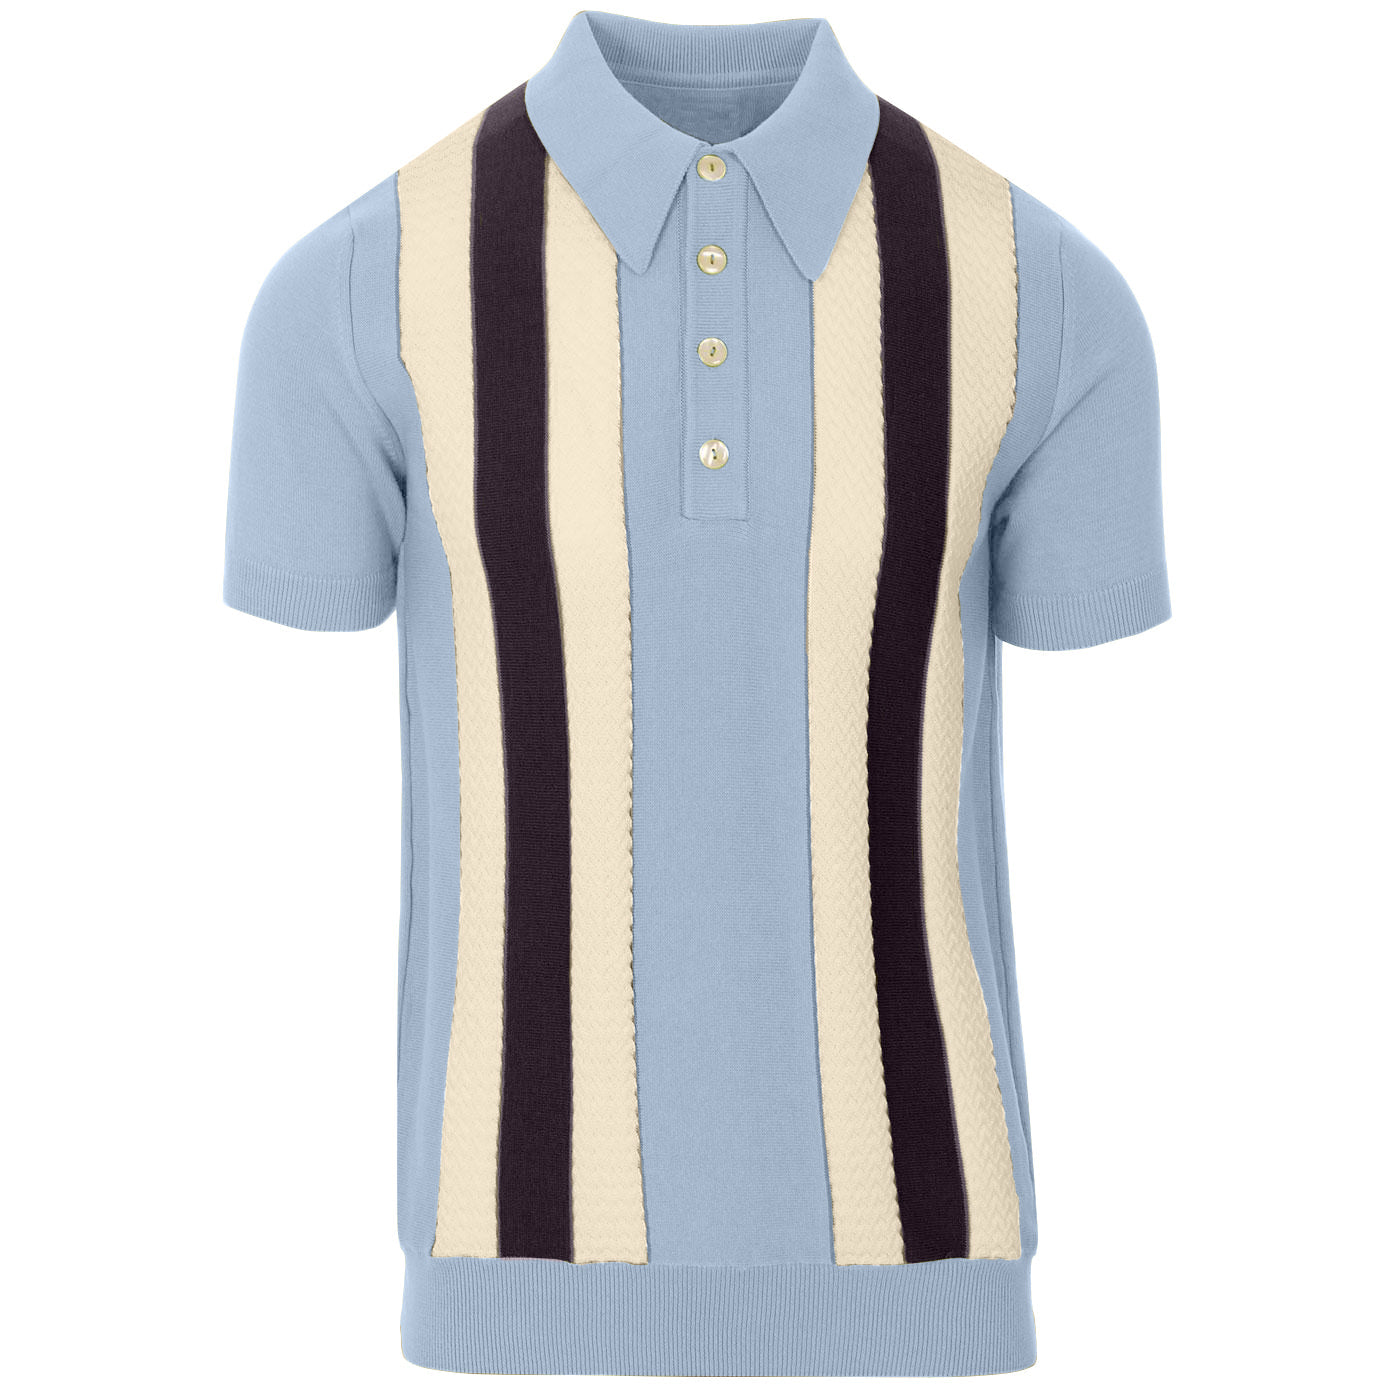 OXKNIT Men Vintage Clothing Mod Blue Knit Retro Polo Casual 1960s Stripe – OXKnit Style